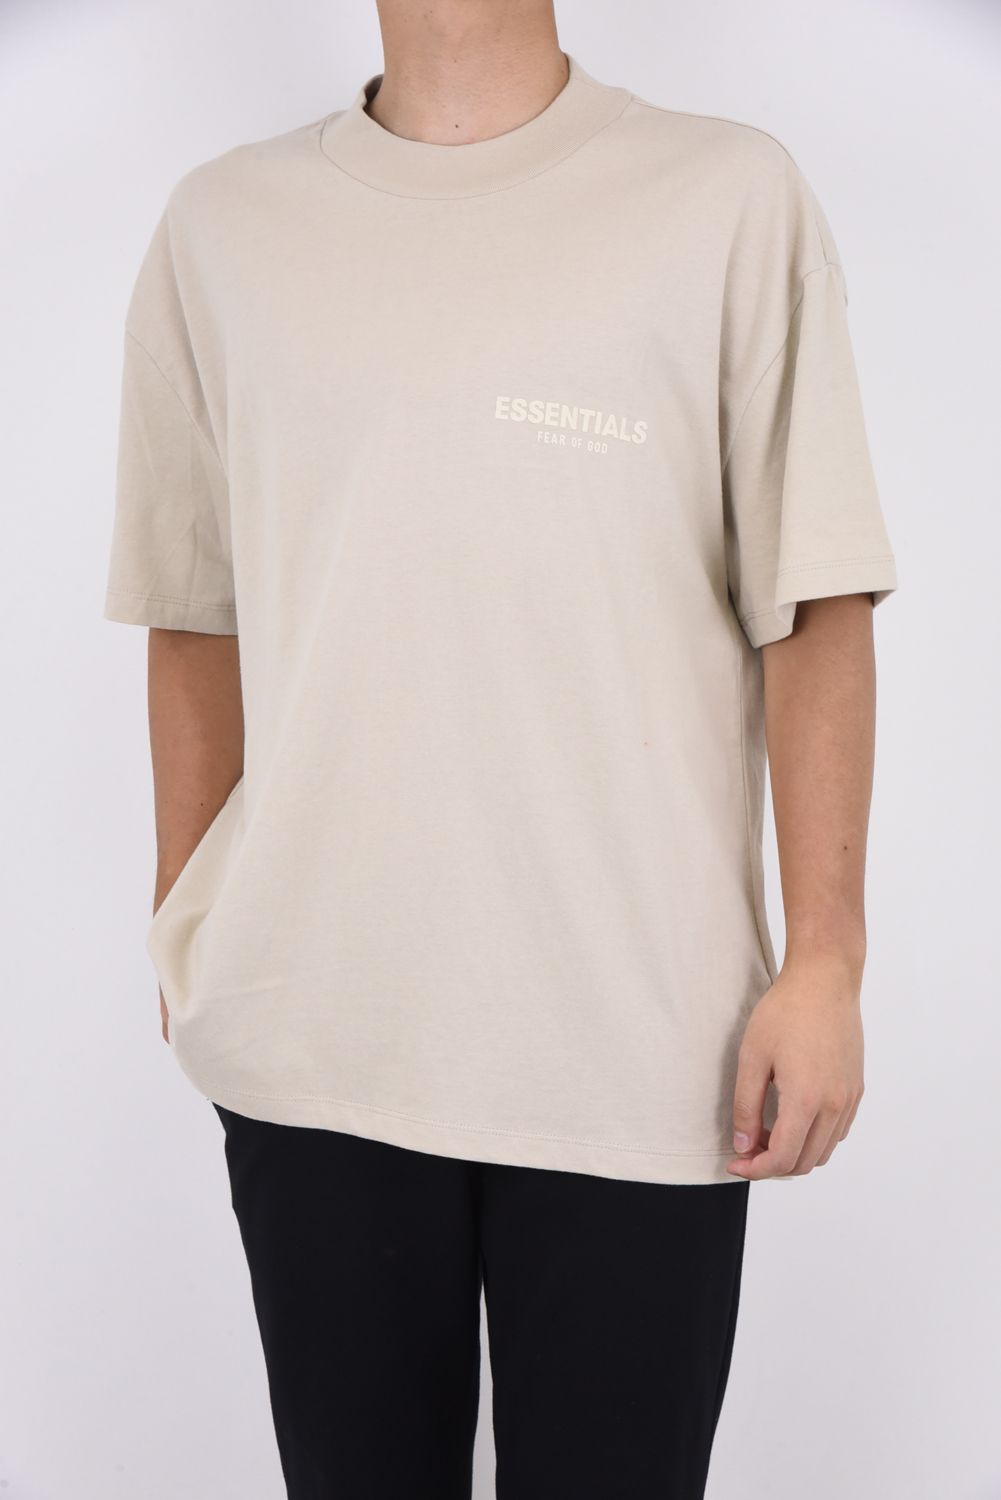 FOG ESSENTIALS フロントロゴ Tシャツ ピンク / Mサイズ